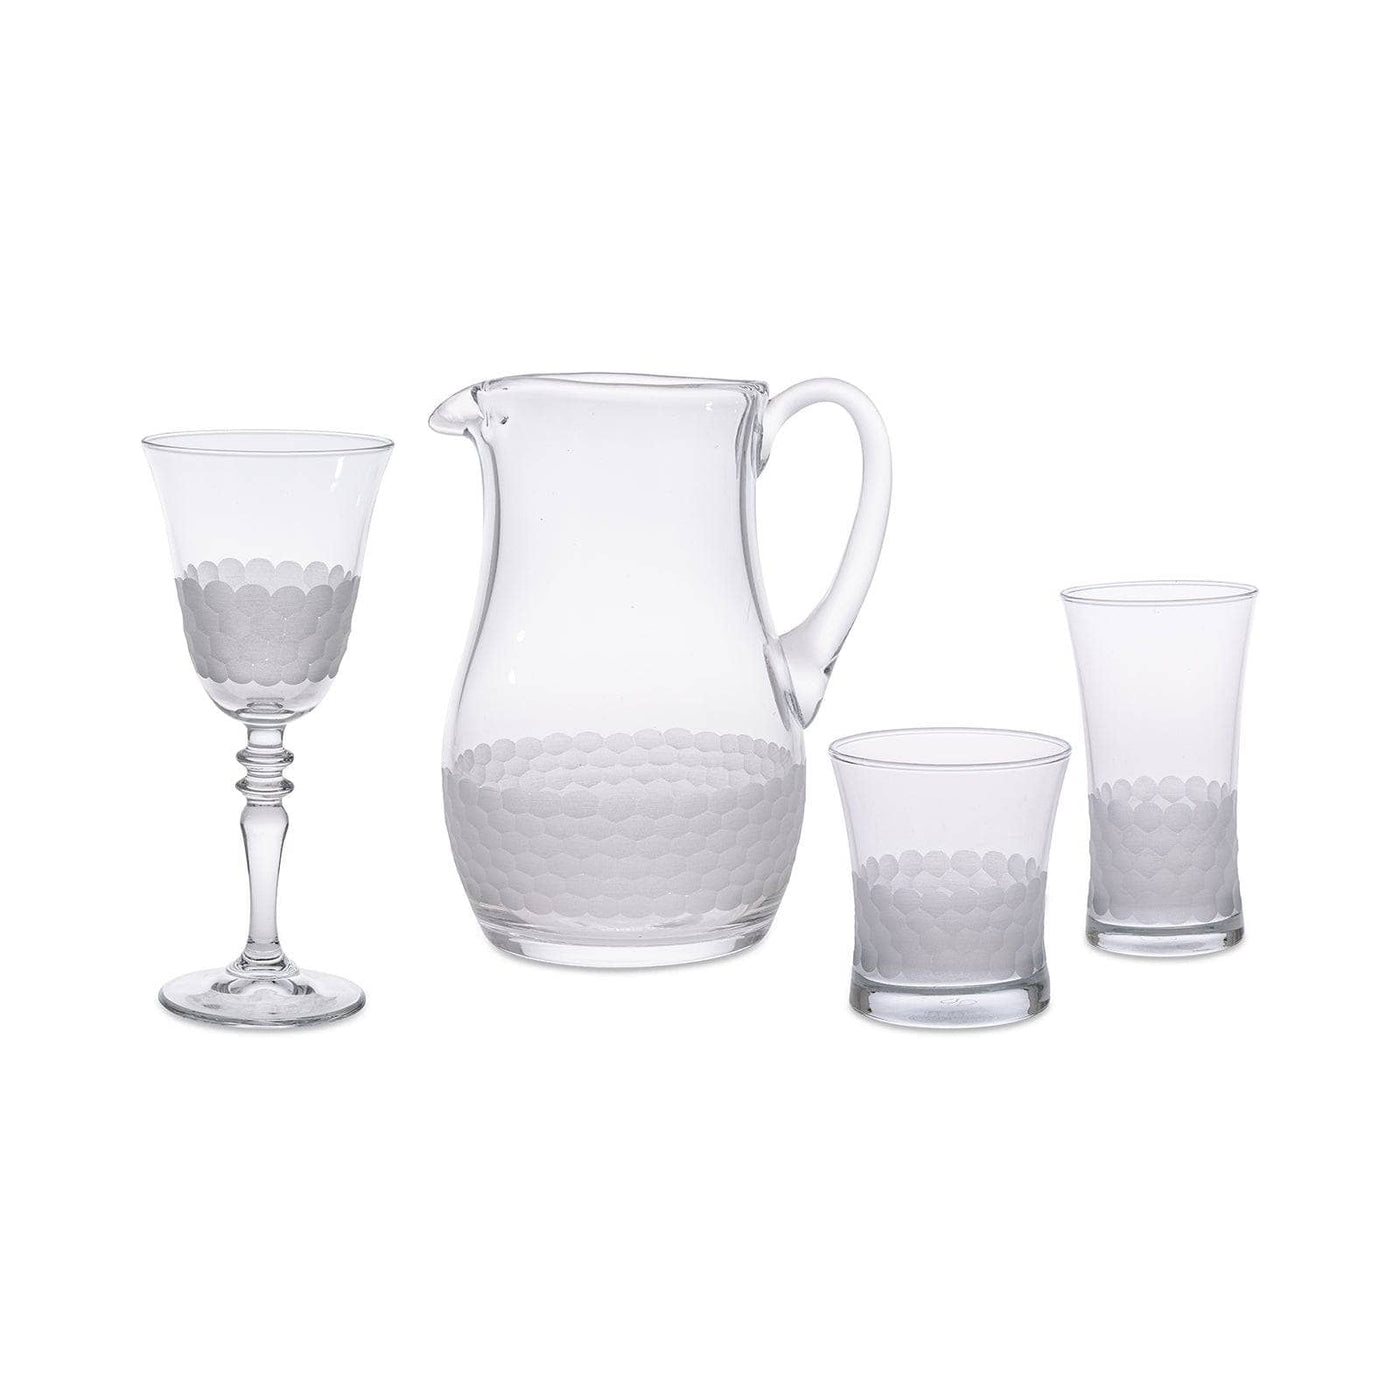 Bermondsey Set of 6 Glass Tumblers, White, 300 ml Glasses & Tumblers sazy.com